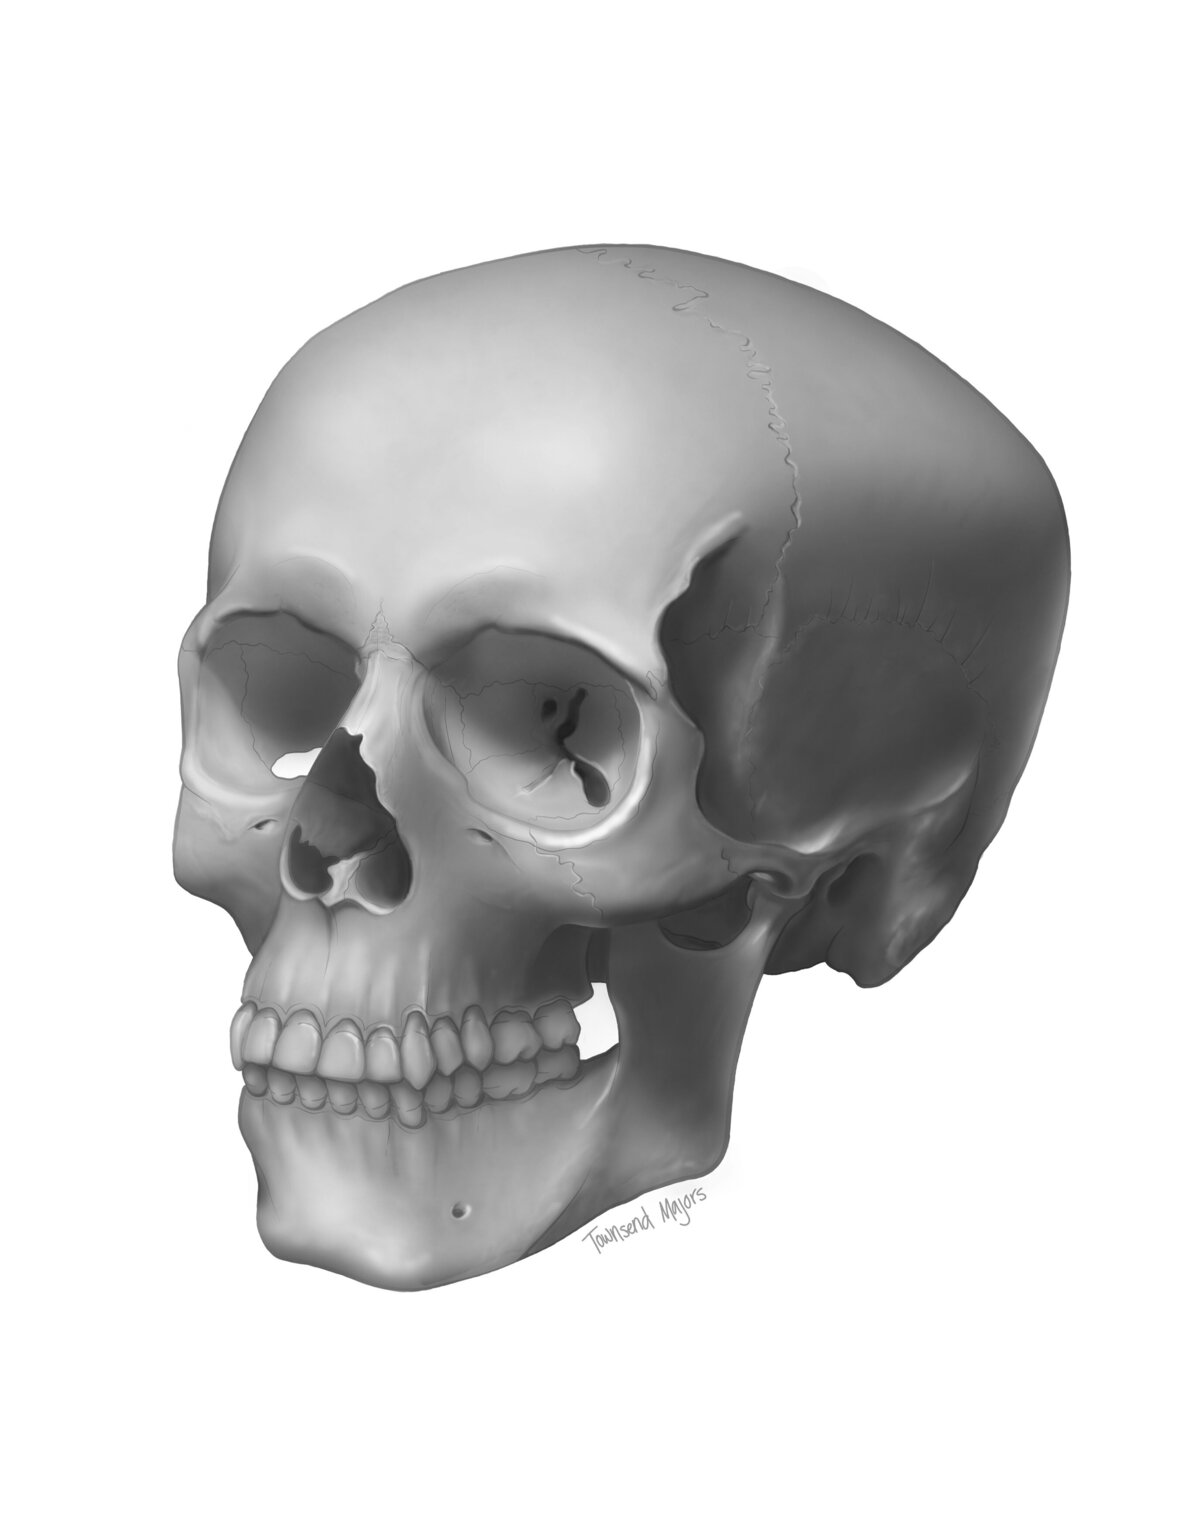 townsend-majors-anatomical-skull